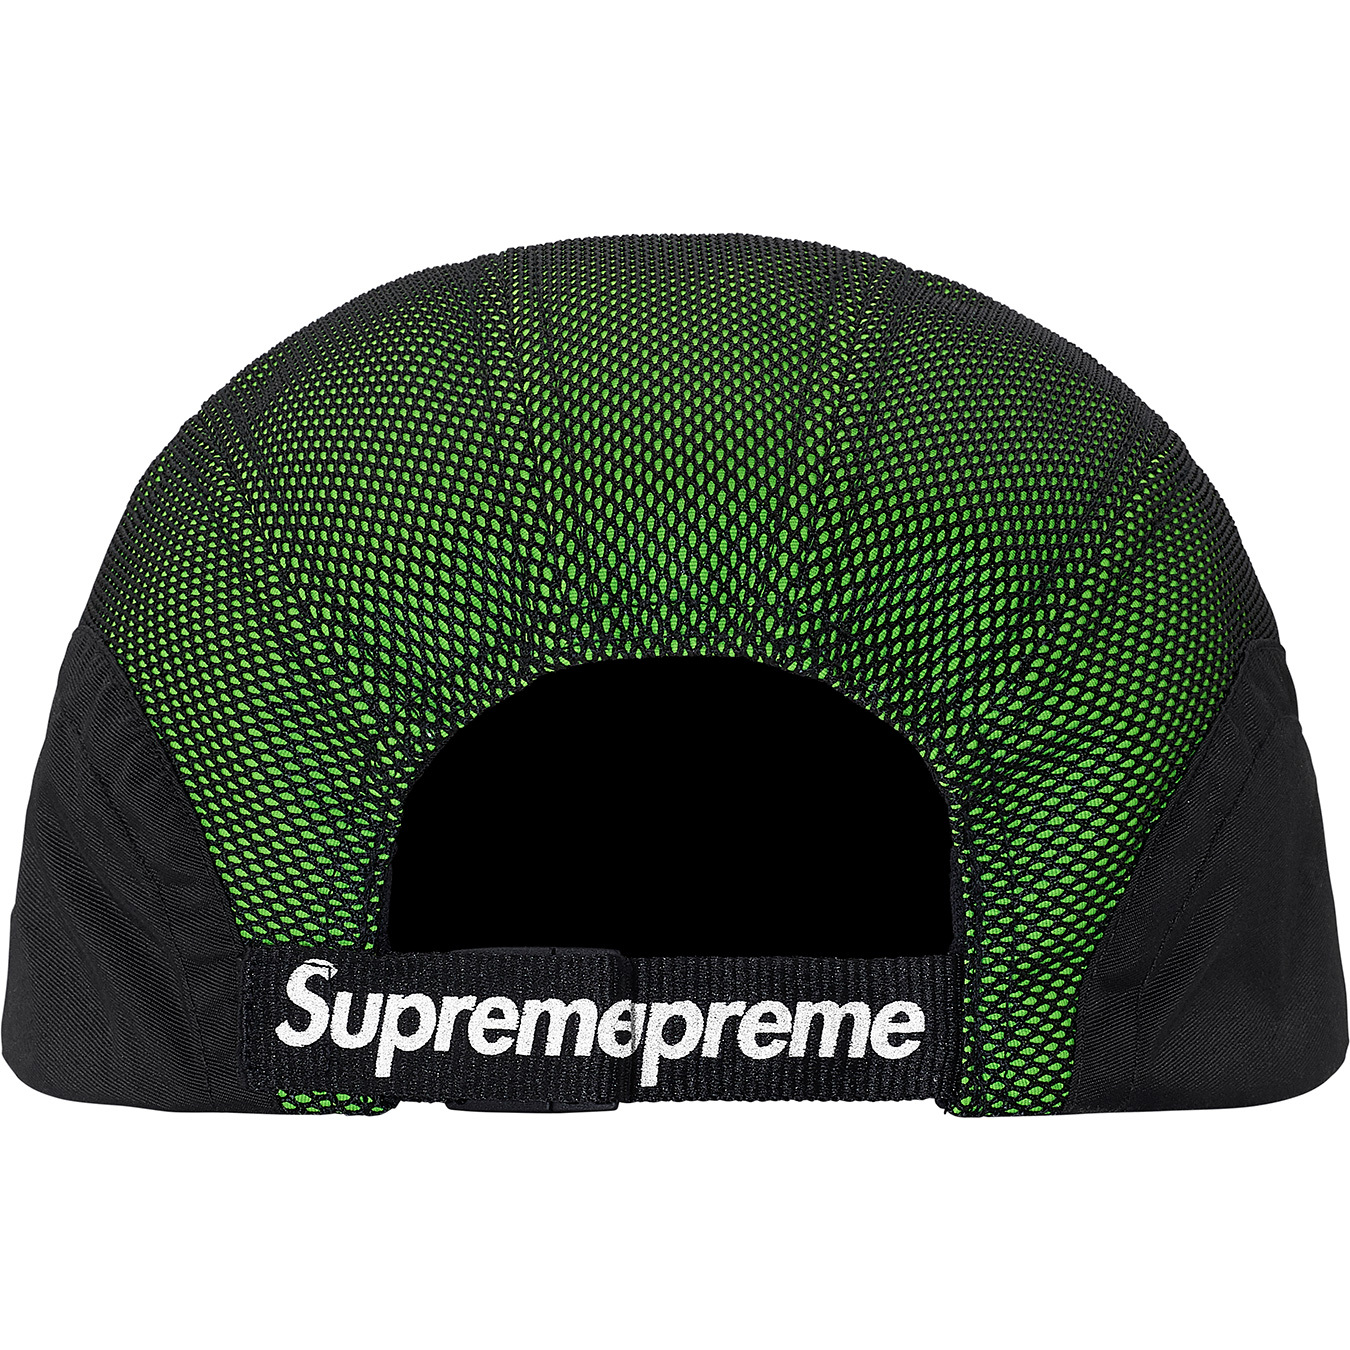 Supreme/Nike Trail Running Hat - Supreme Community